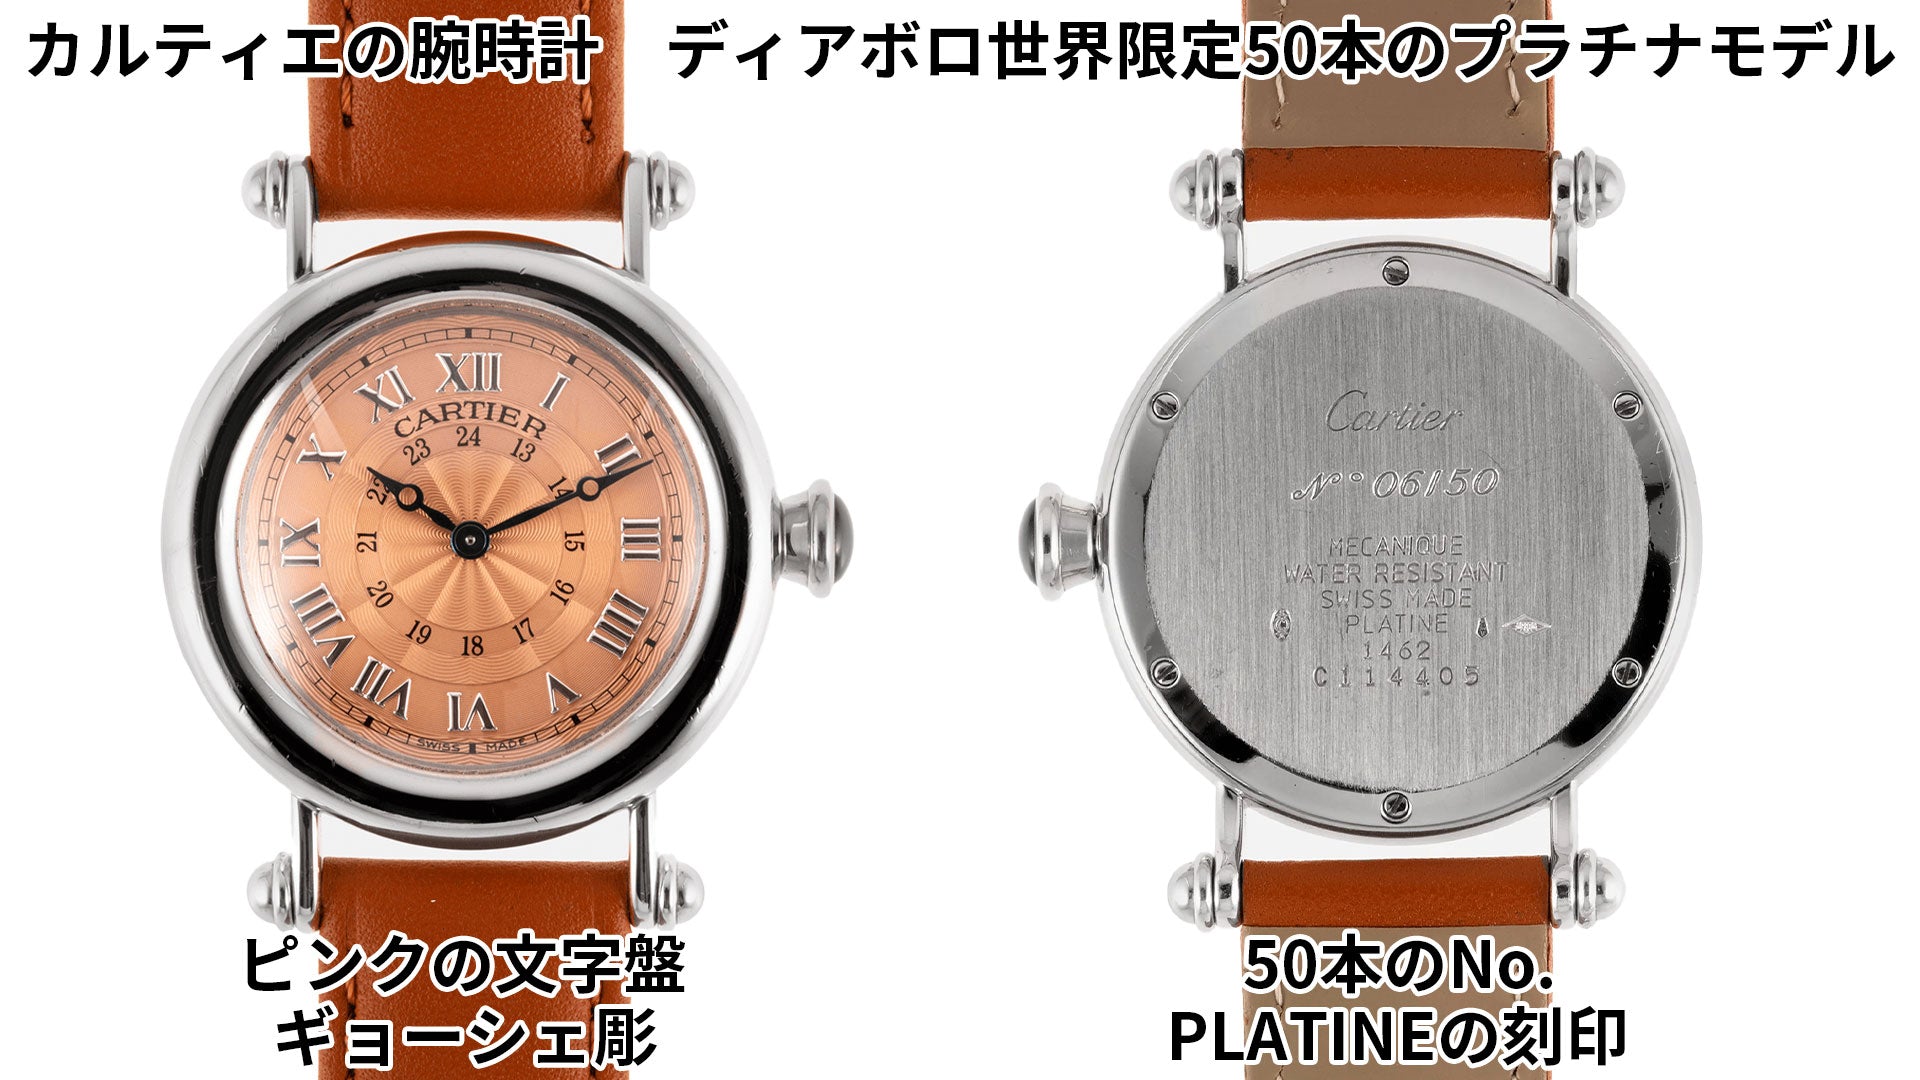 Cartier Diablo watch: a platinum model limited to 50 pieces worldwide